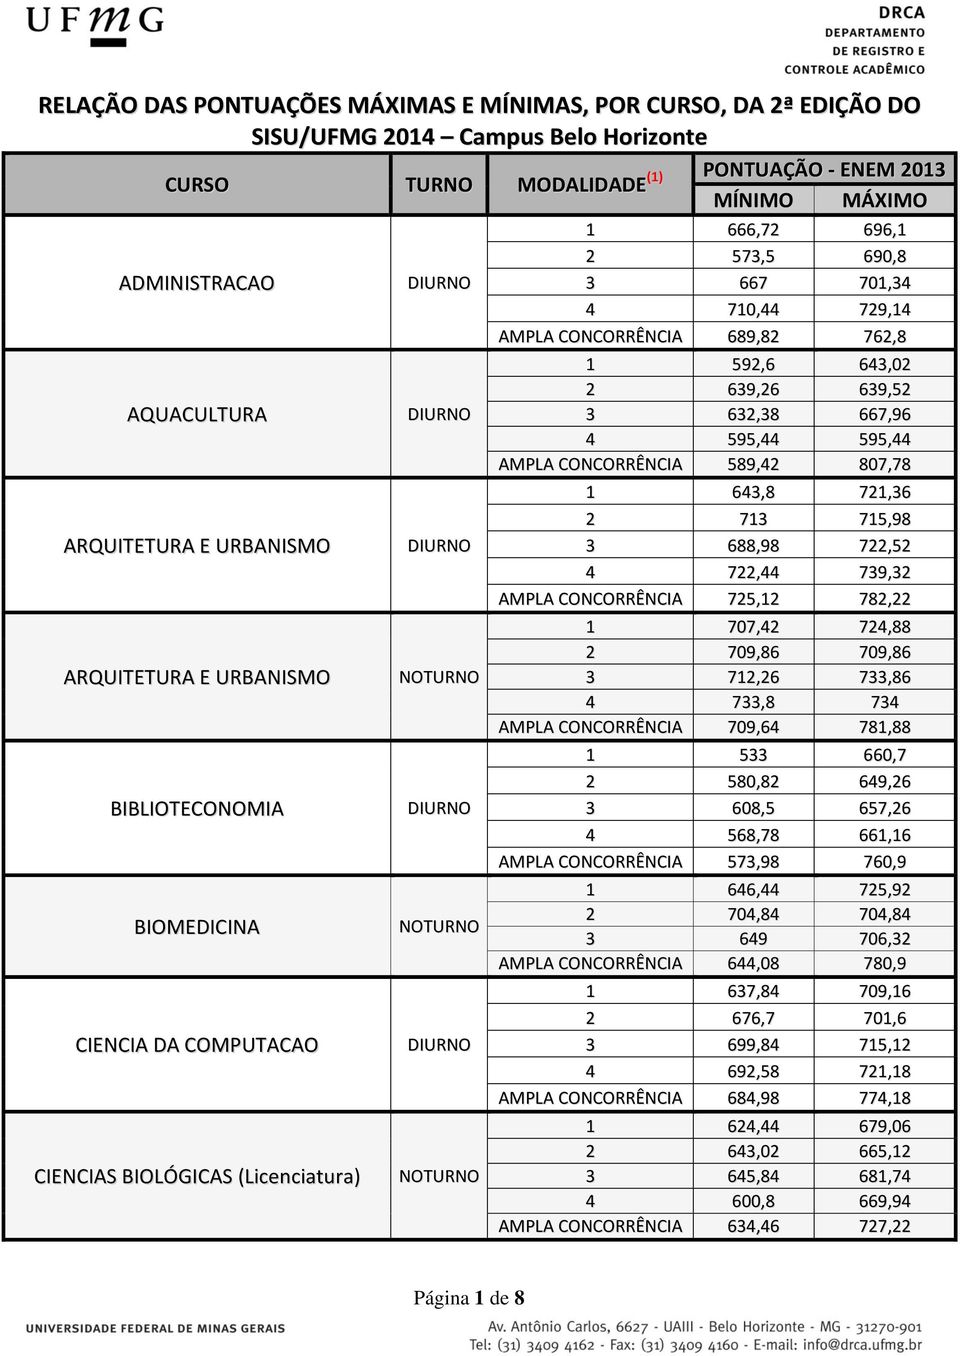 Notas de Corte UFMG no Sisu 2014 (Ampla Concorrência)